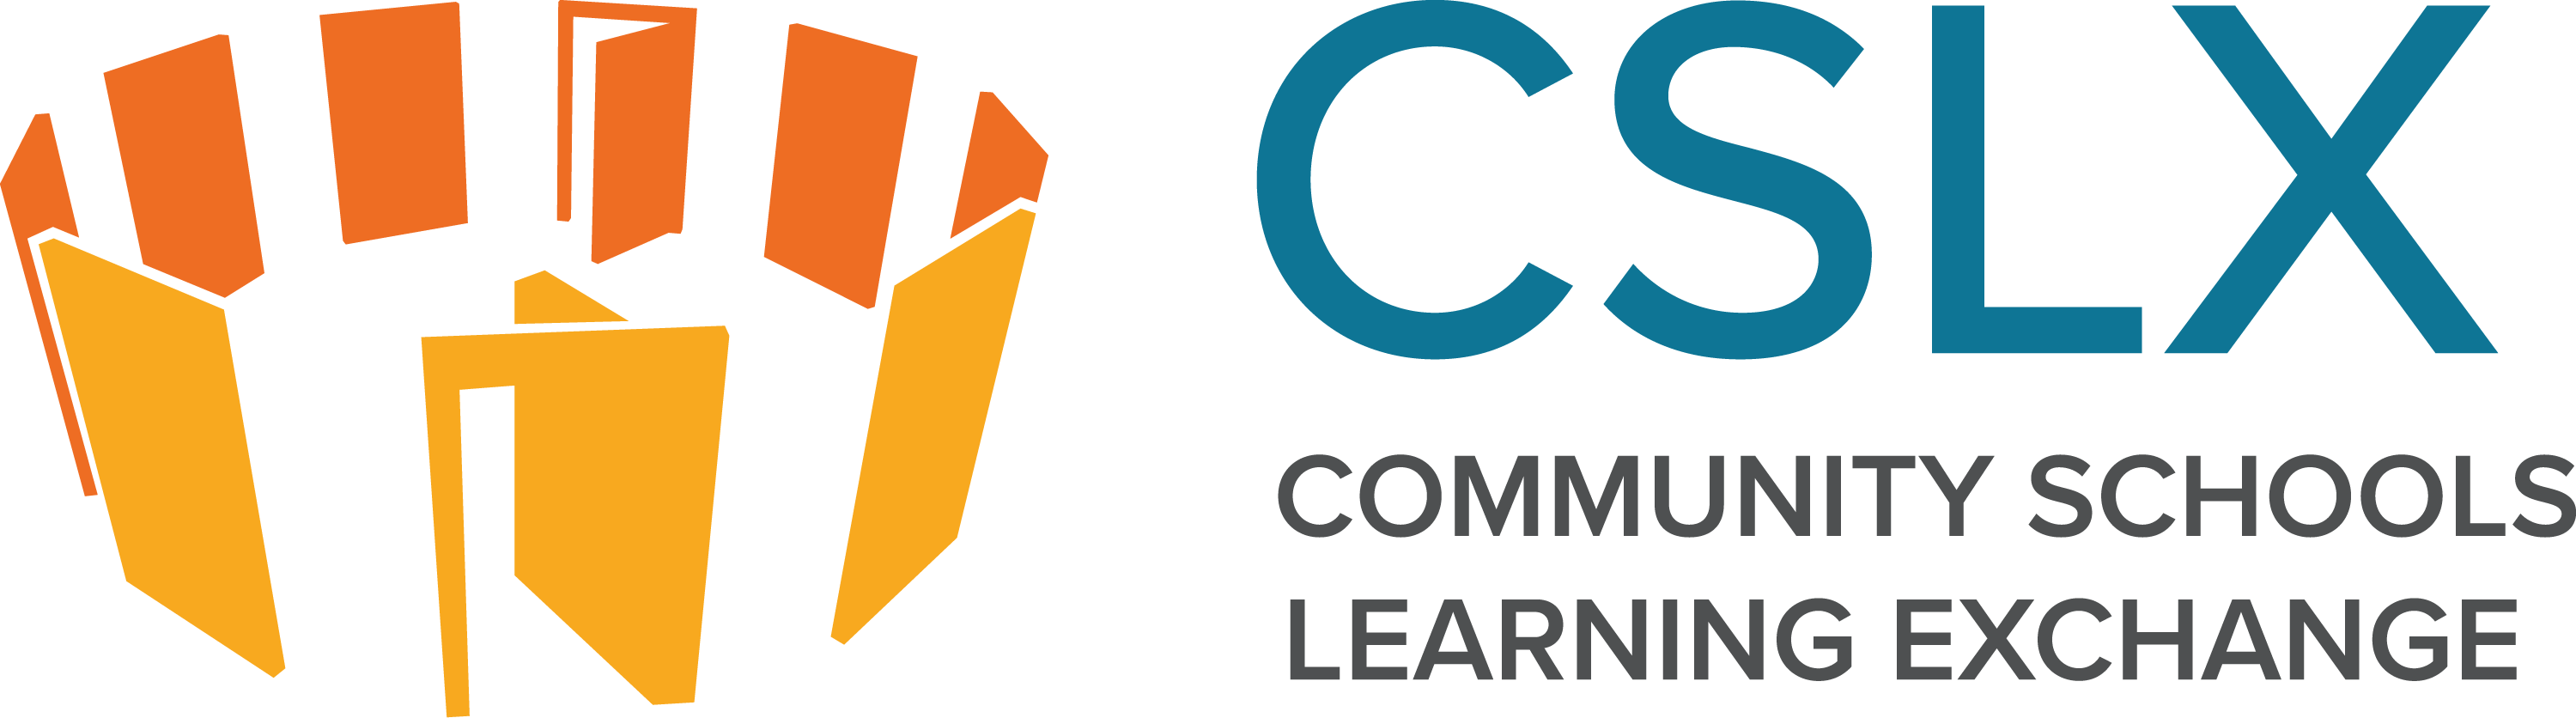 Community Schools Learning Exchange (CSLX)